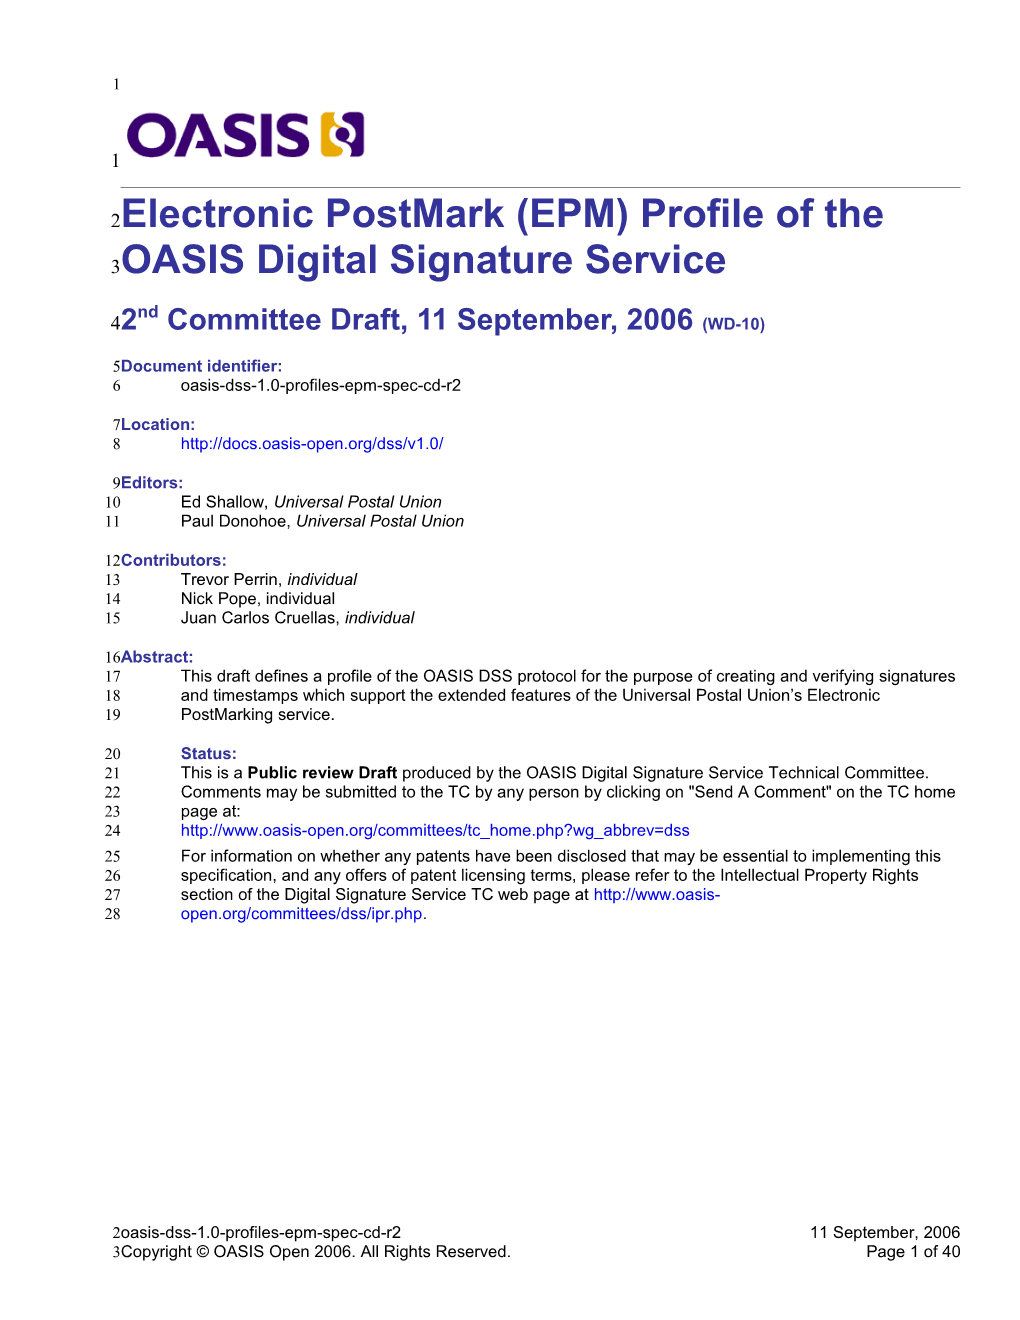 Electronic Postmark (EPM) Profile of the OASIS Digital Signature Service